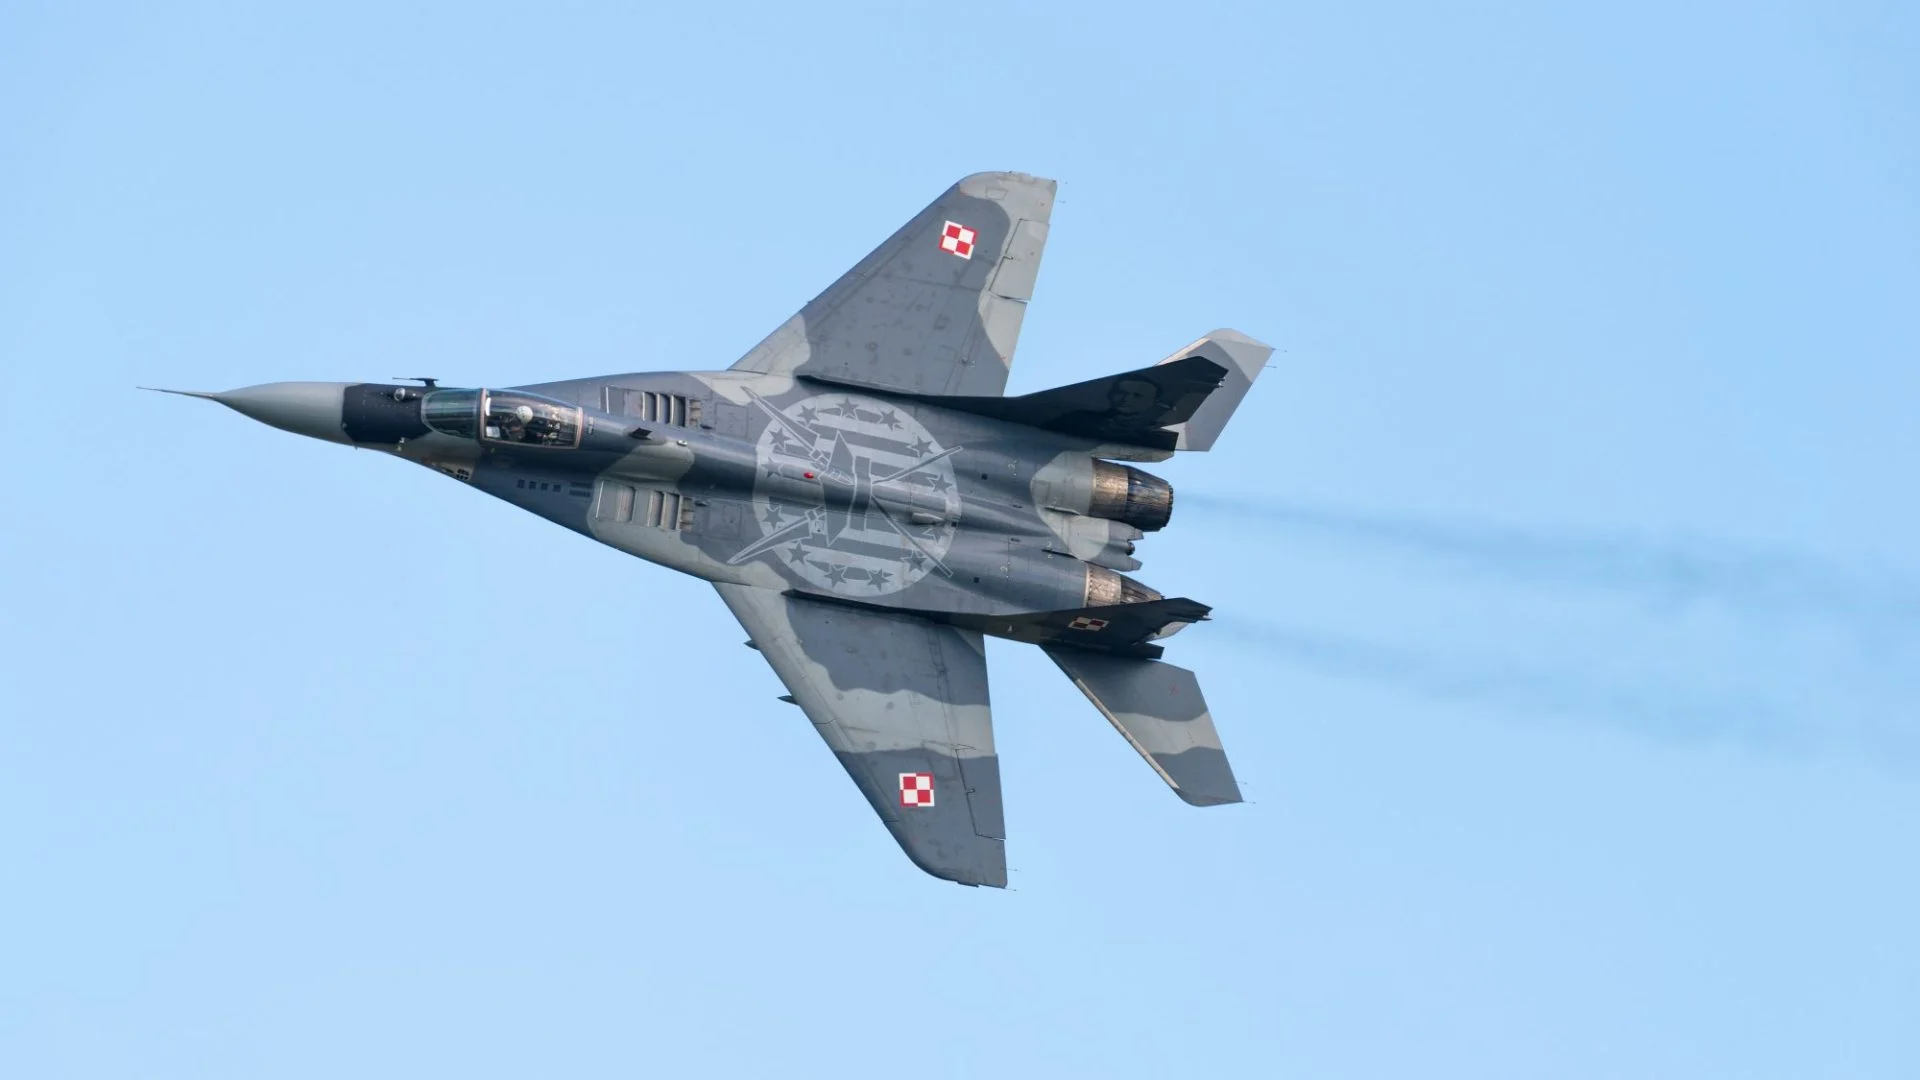 Finally, A NATO Country Offers Its Fighter Jets To Ukraine; Slovak Minister’s Proposal Unlikely To Impress Zelensky